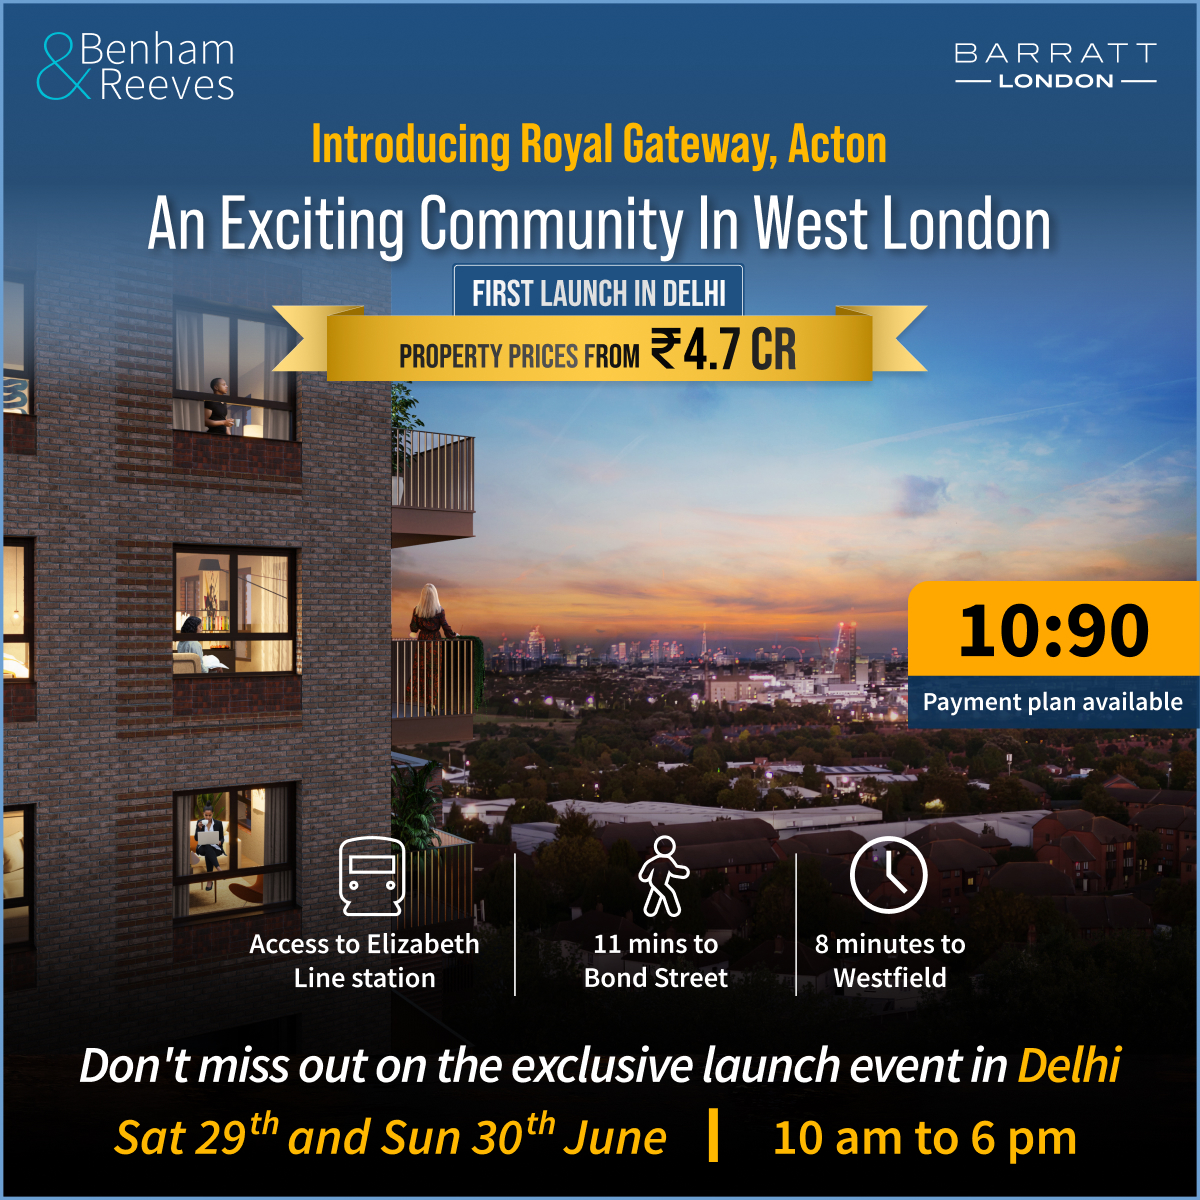 Exclusive launch event of Royal Gateway in Delhi, New Delhi, Delhi, India